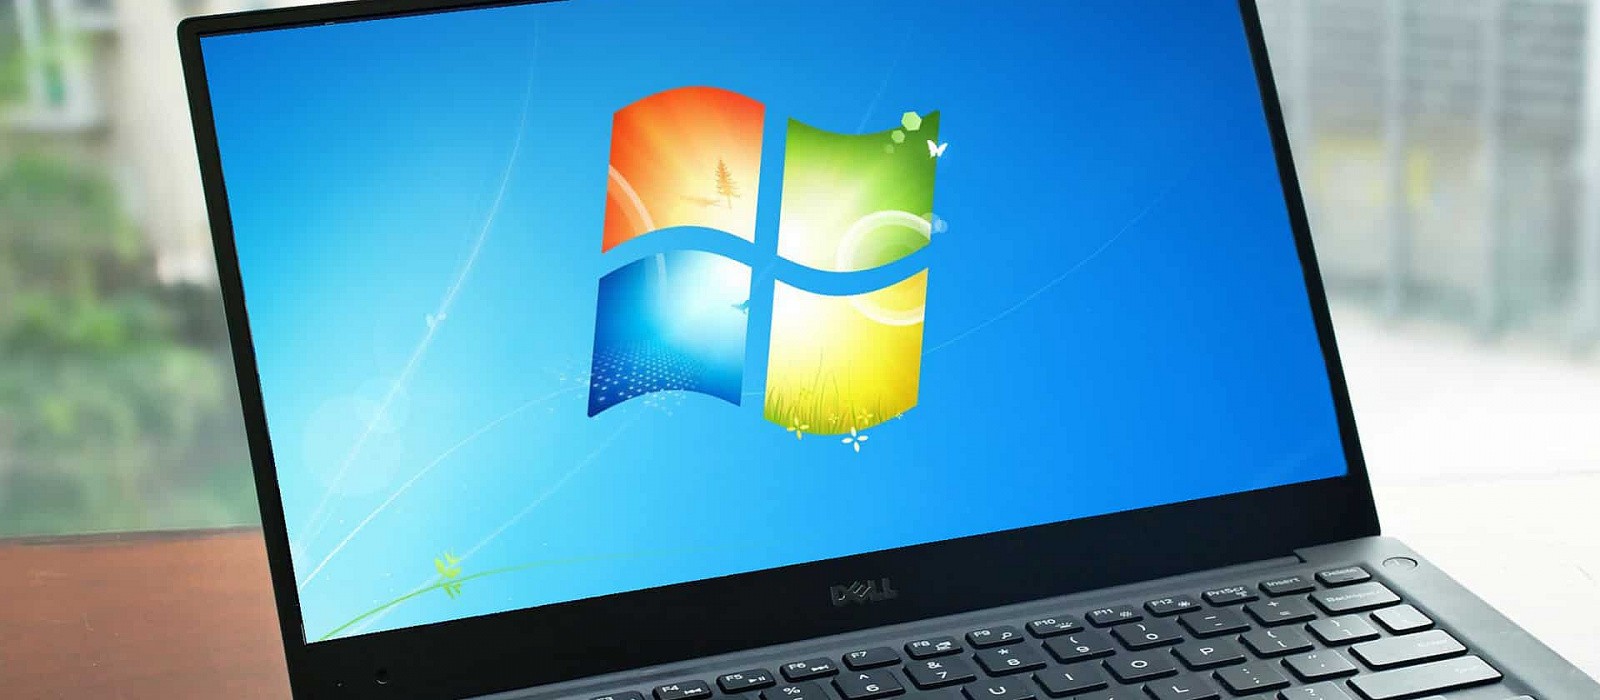 
 Уходит эпоха — Microsoft объявила последний год поддержки Windows 7
 